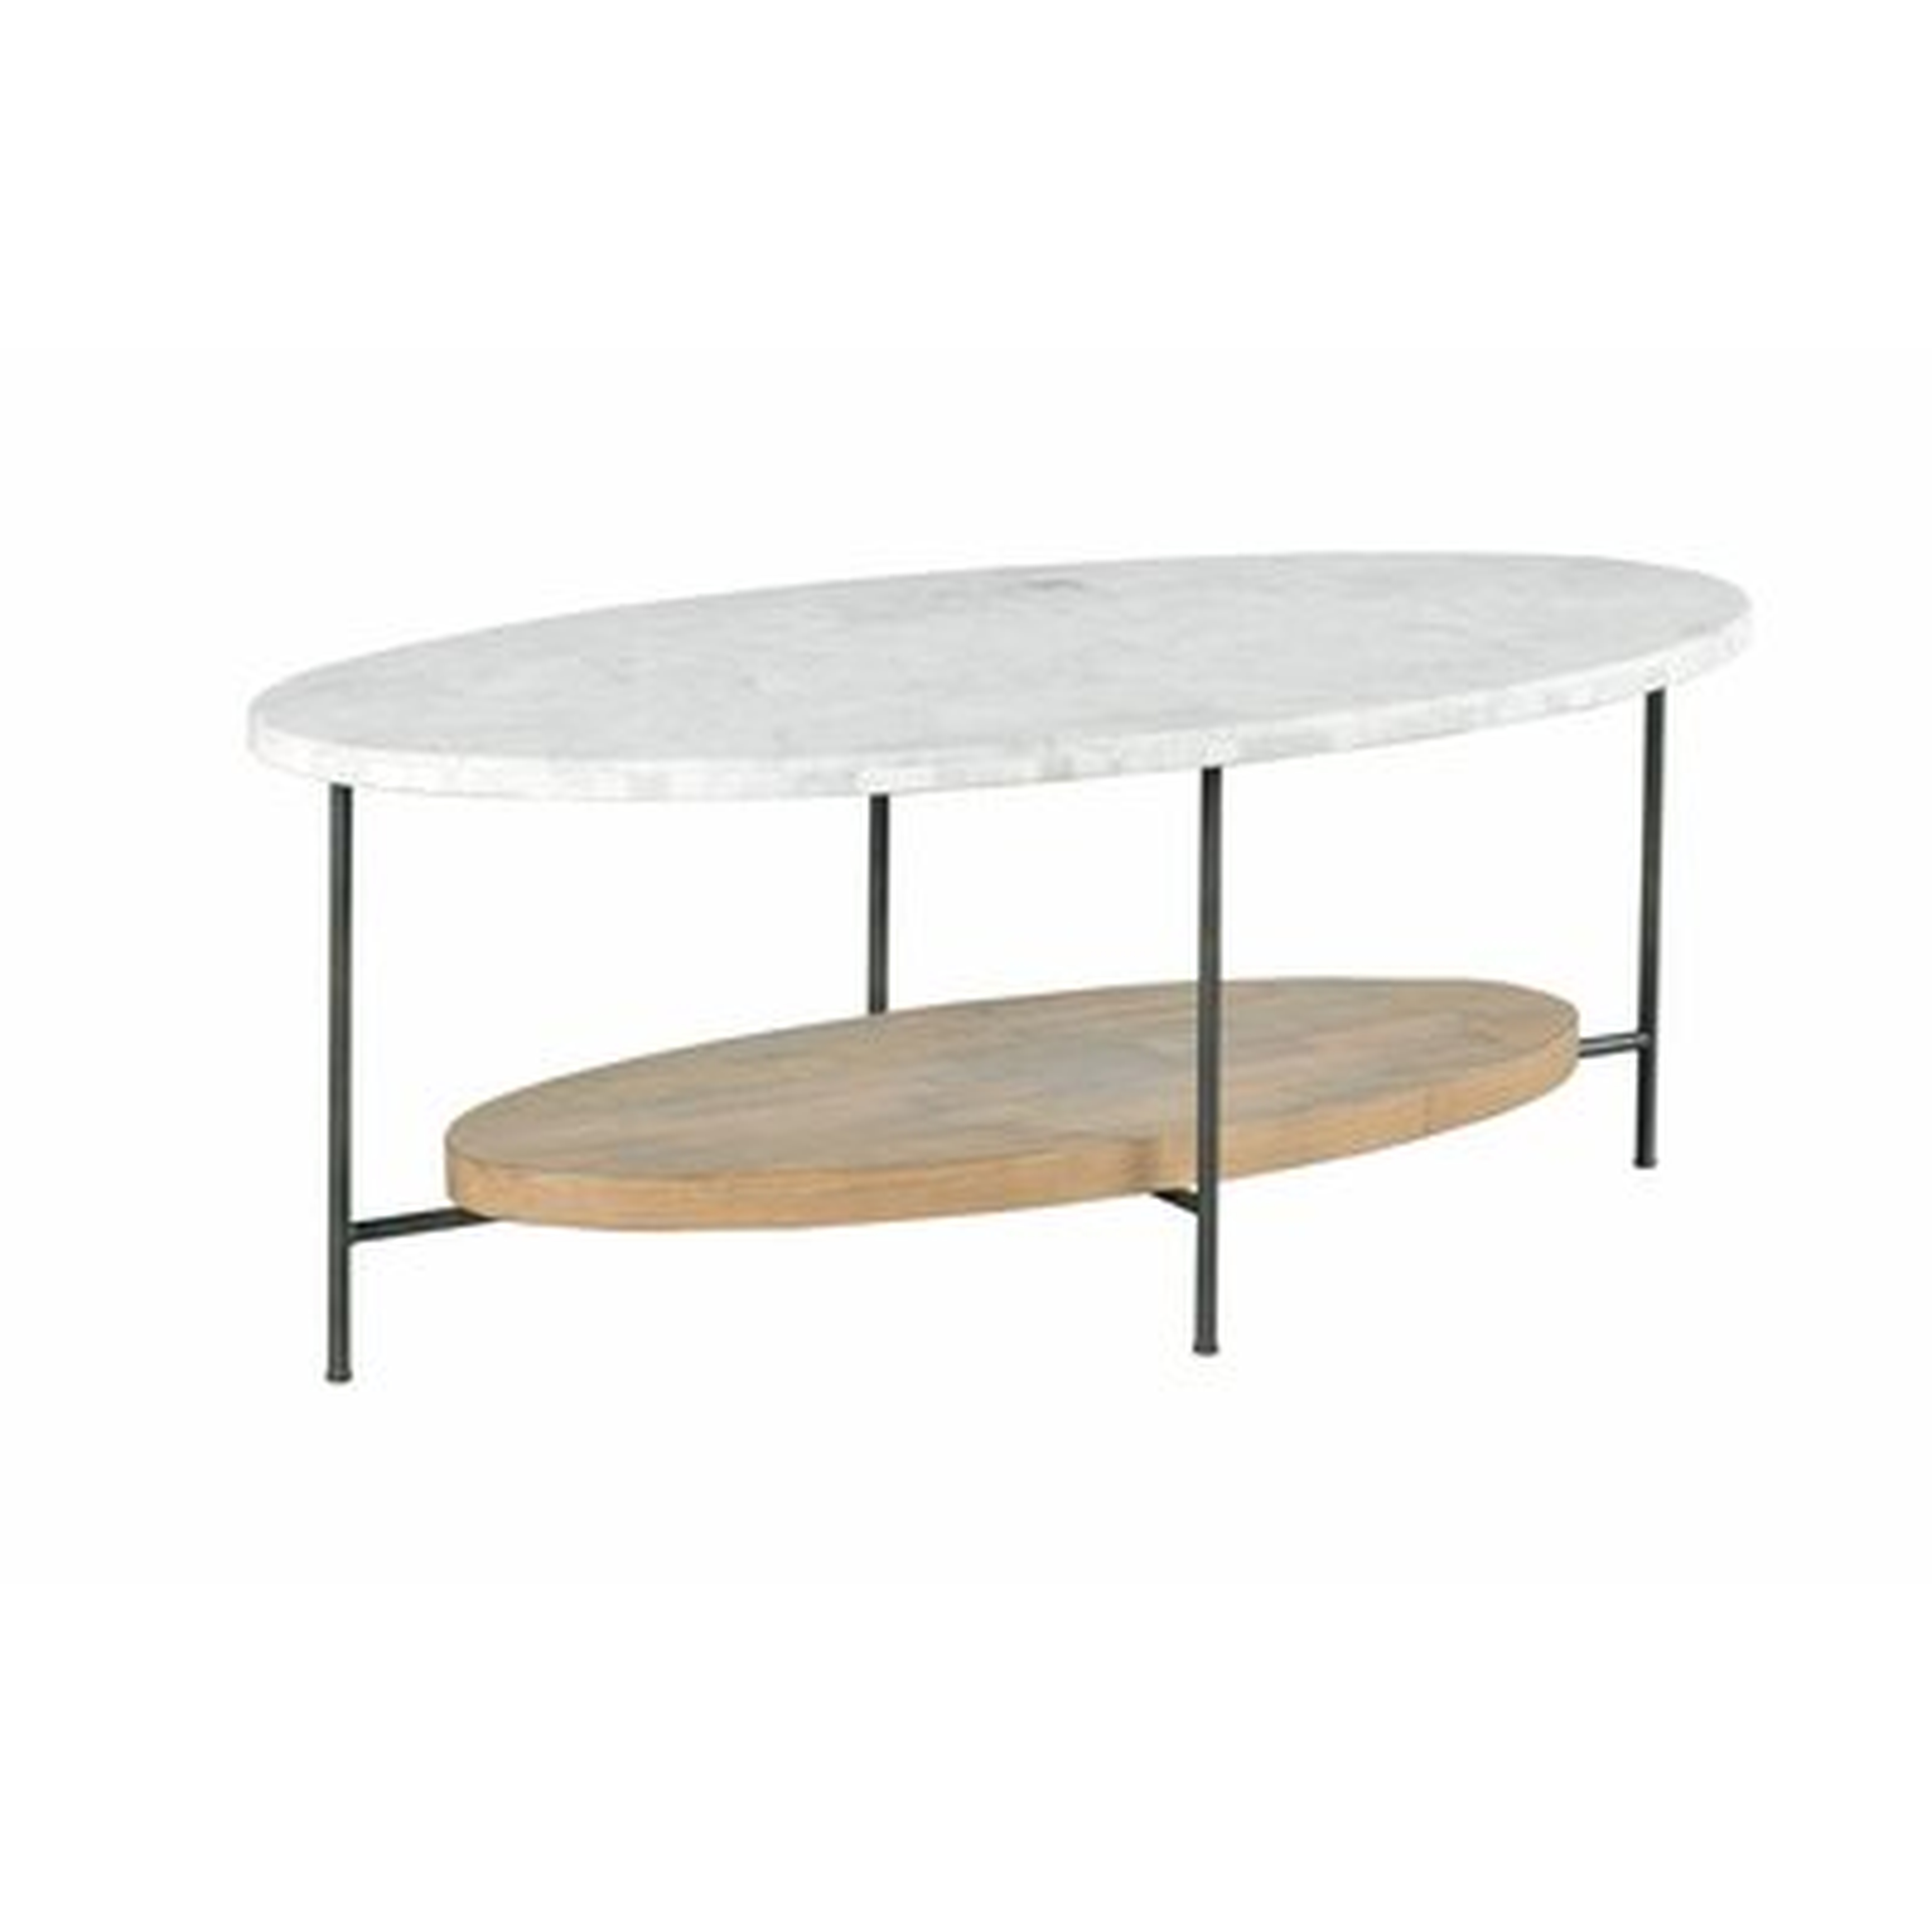 Ayslyn Floor Shelf Coffee Table with Storage - Wayfair